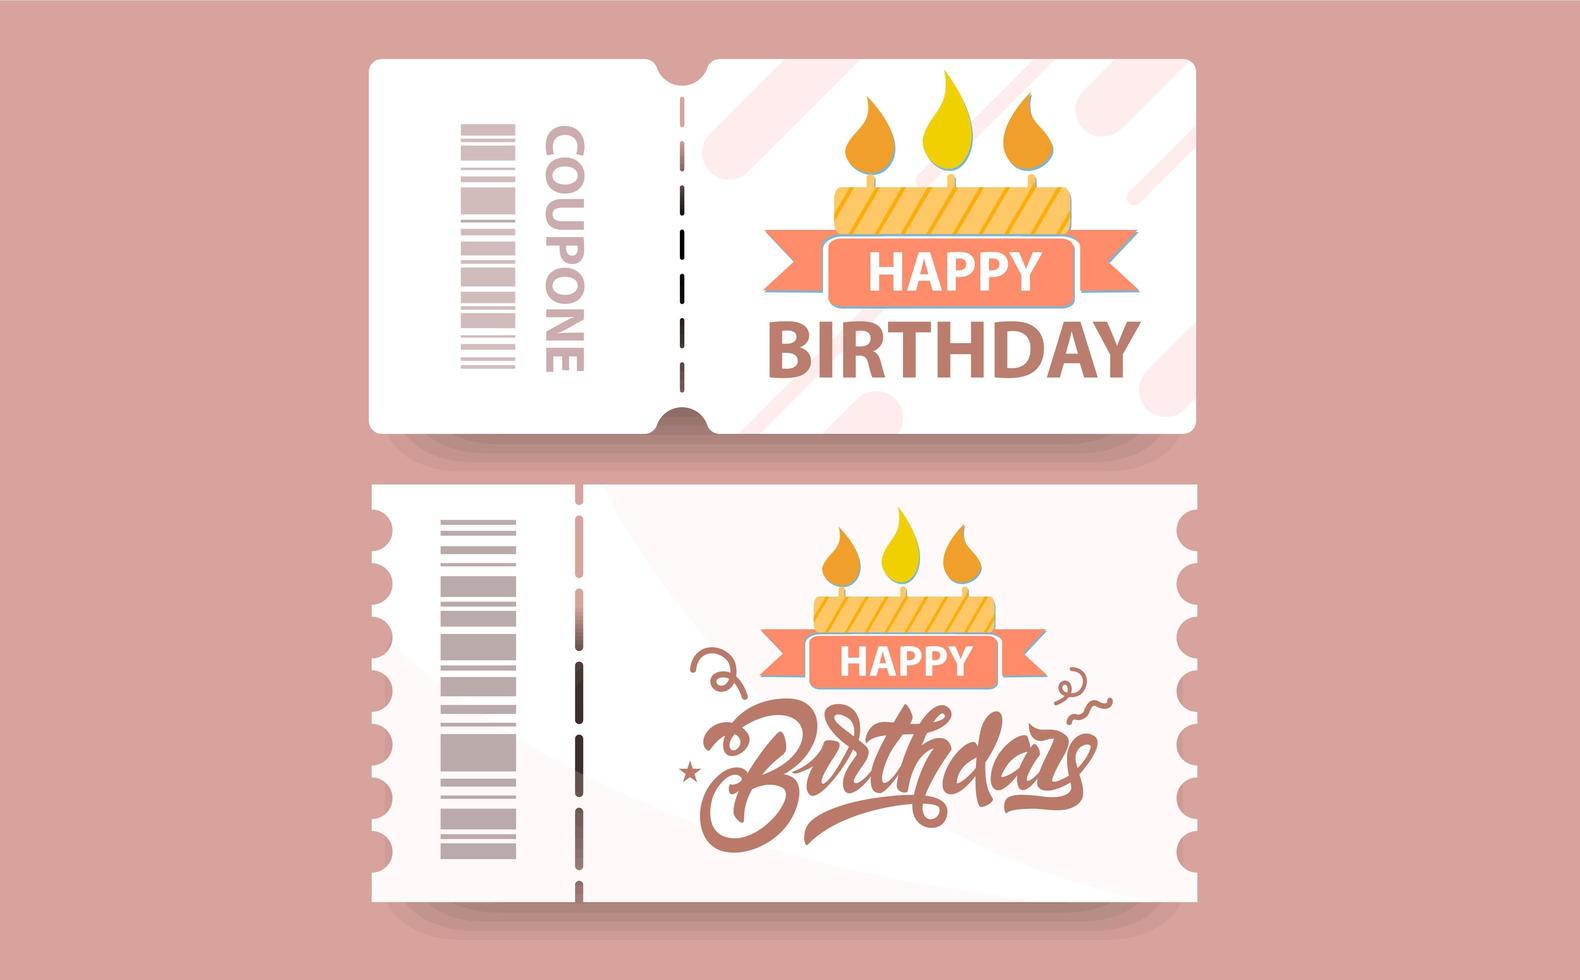 födelsedagskupong presentkort med kupongkod vektor